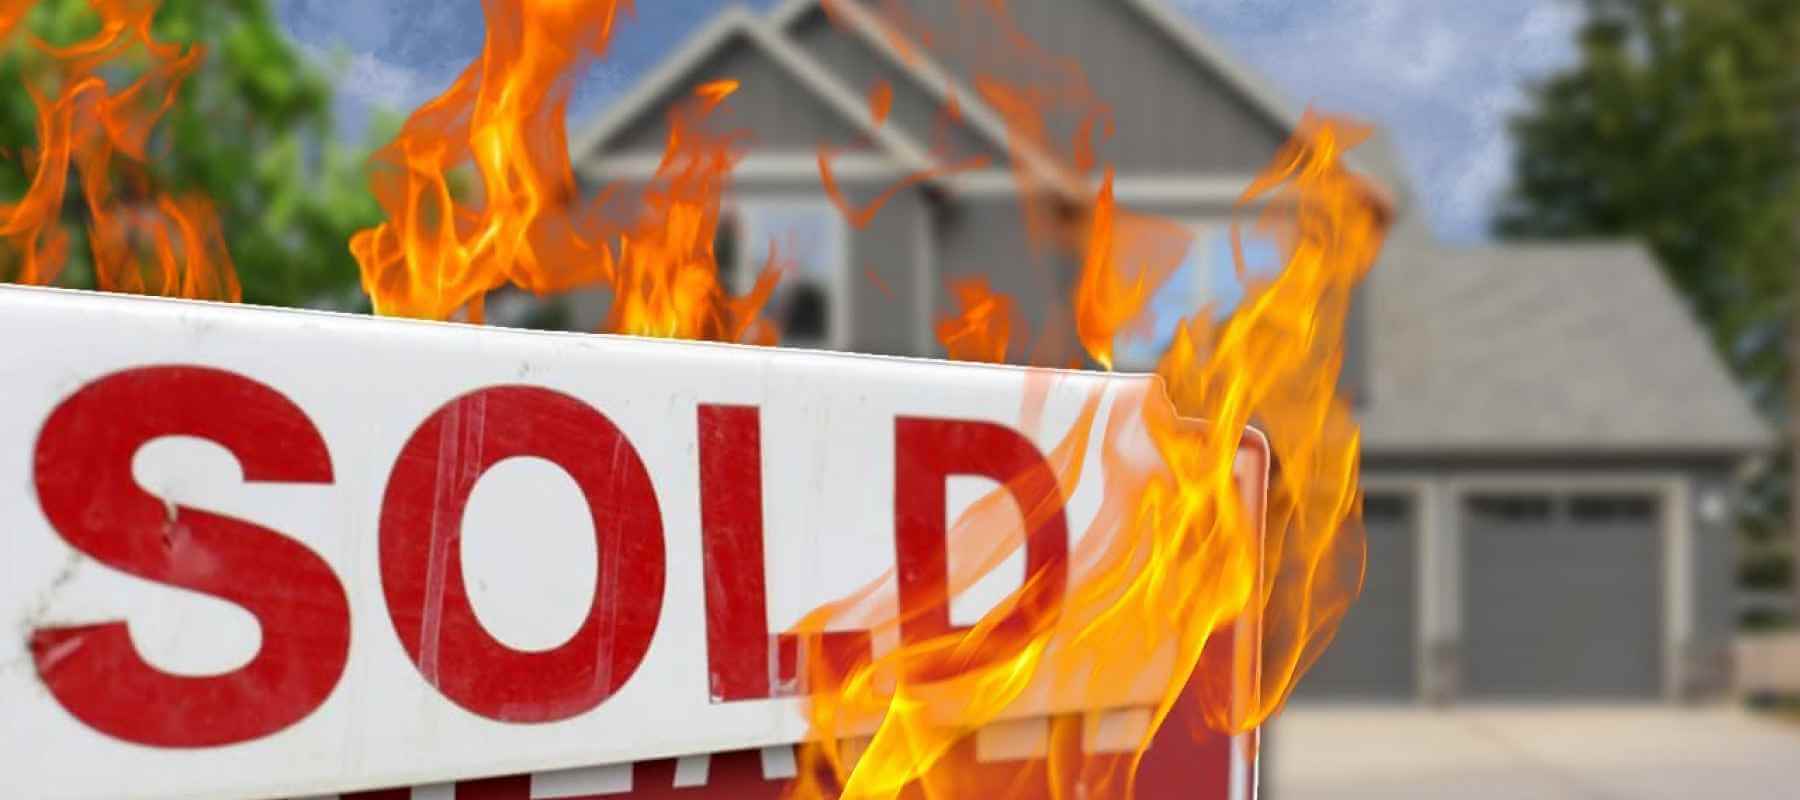 Denver Housing Market is on Fire